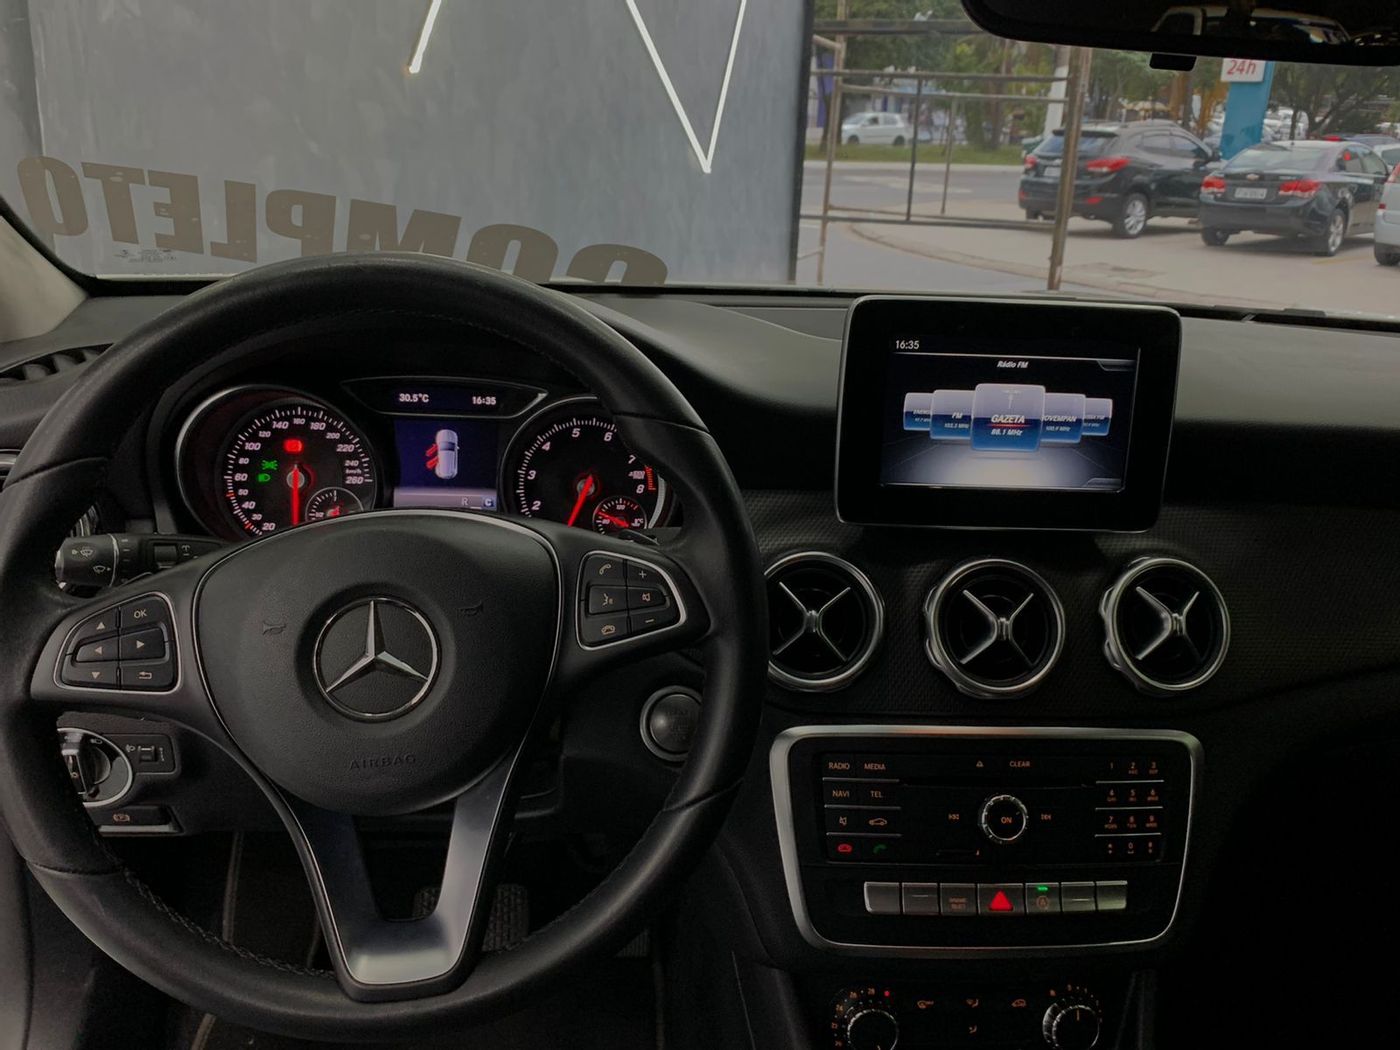 Mercedes GLA 200 Style 1.6 TB 16V/Flex Aut.